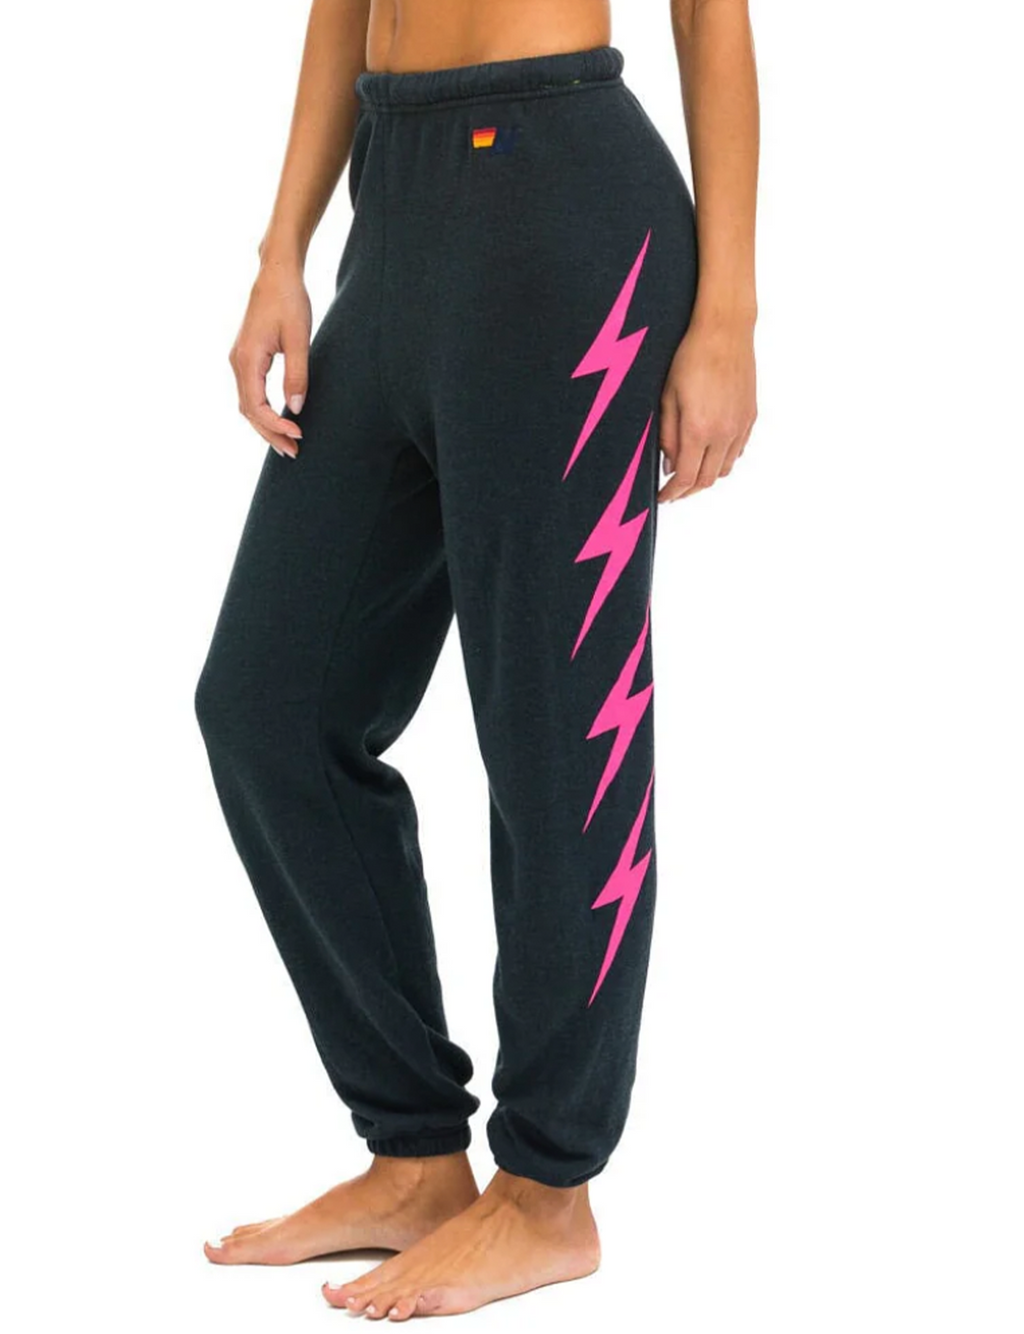 Bolt 4 Women's Sweatpants, Charcoal/Neon Pink